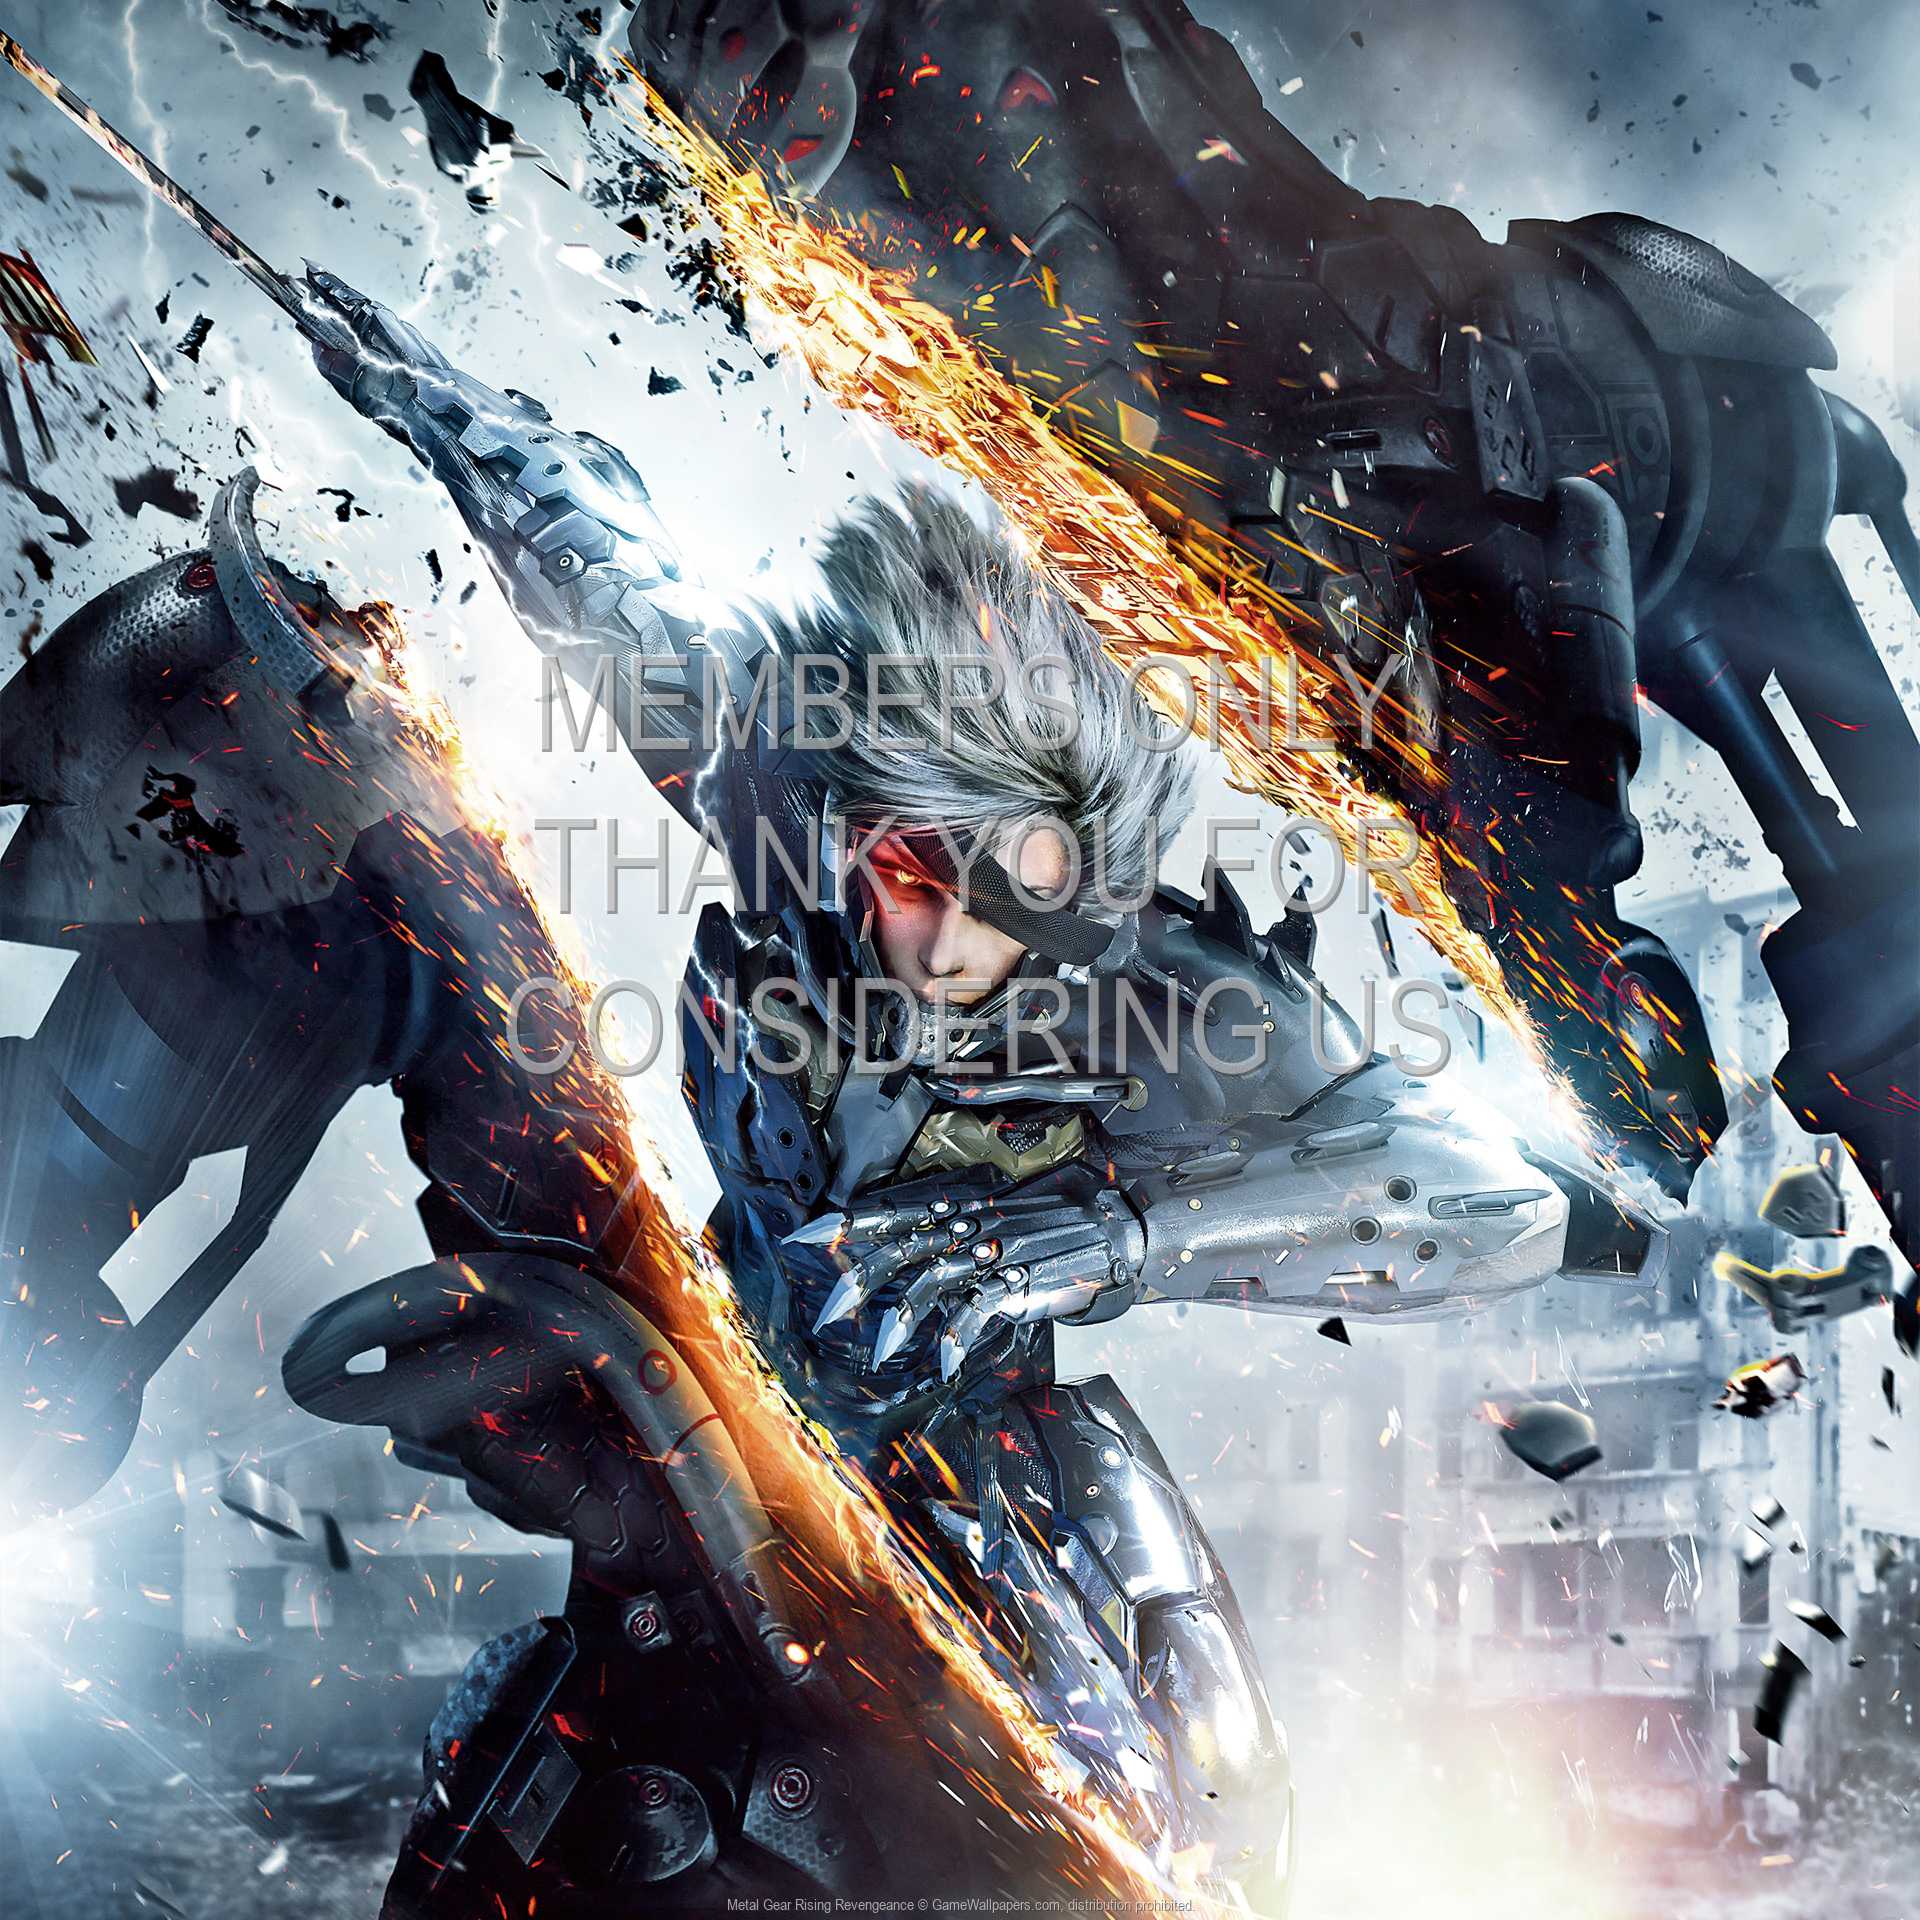 Metal Gear Rising: Revengeance 1080p Horizontal Mobile wallpaper or background 06